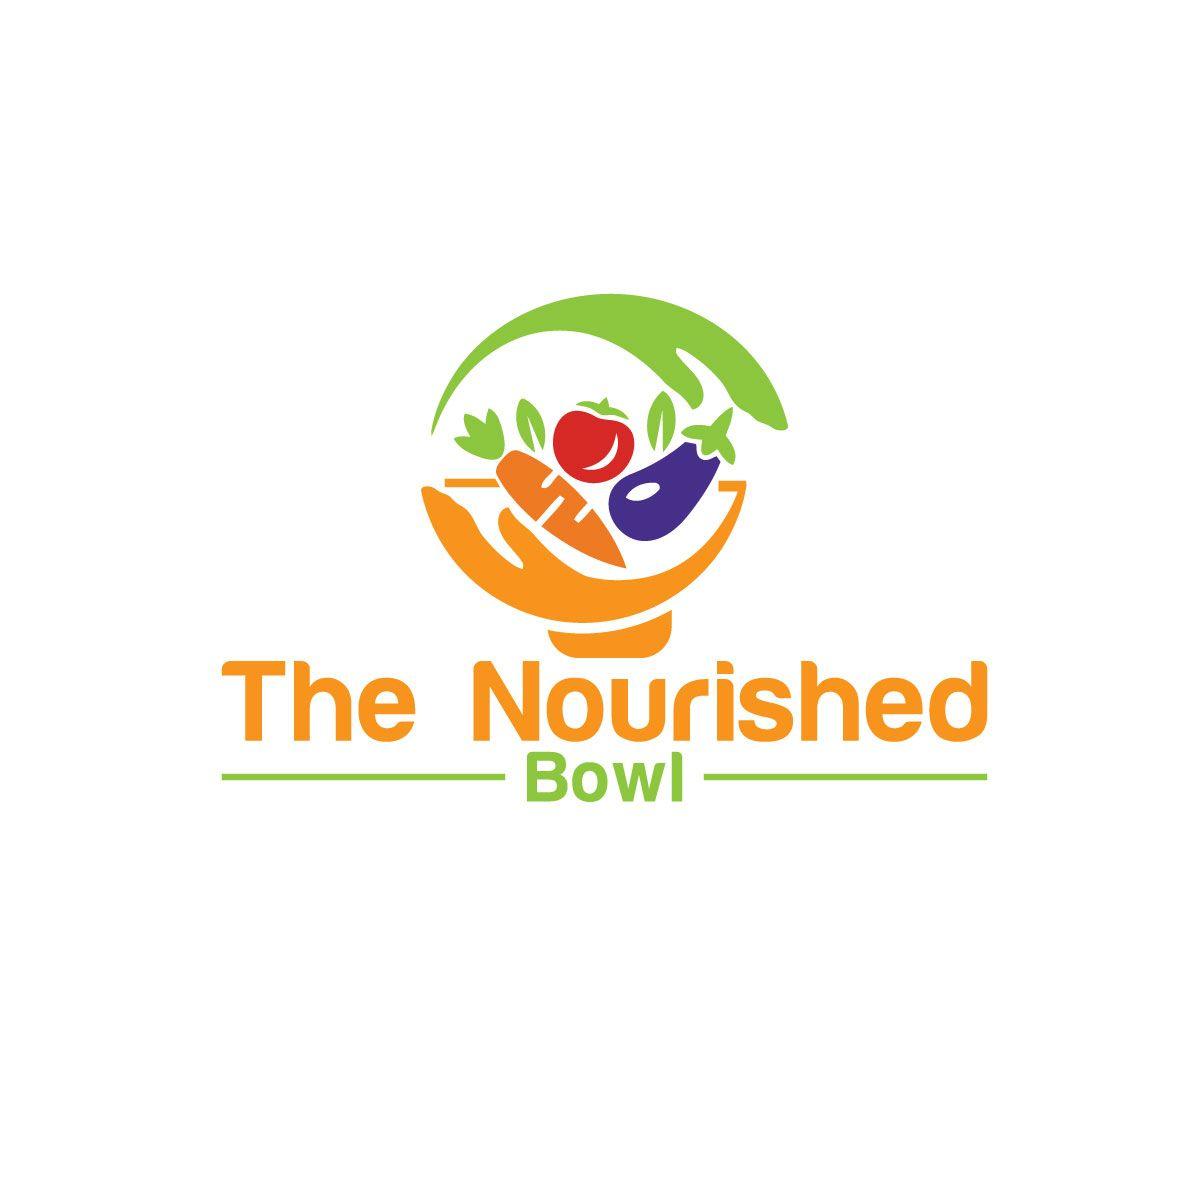 Ireland Fox Logo - Colorful, Playful, Food Service Logo Design for The Nourished Bowl ...